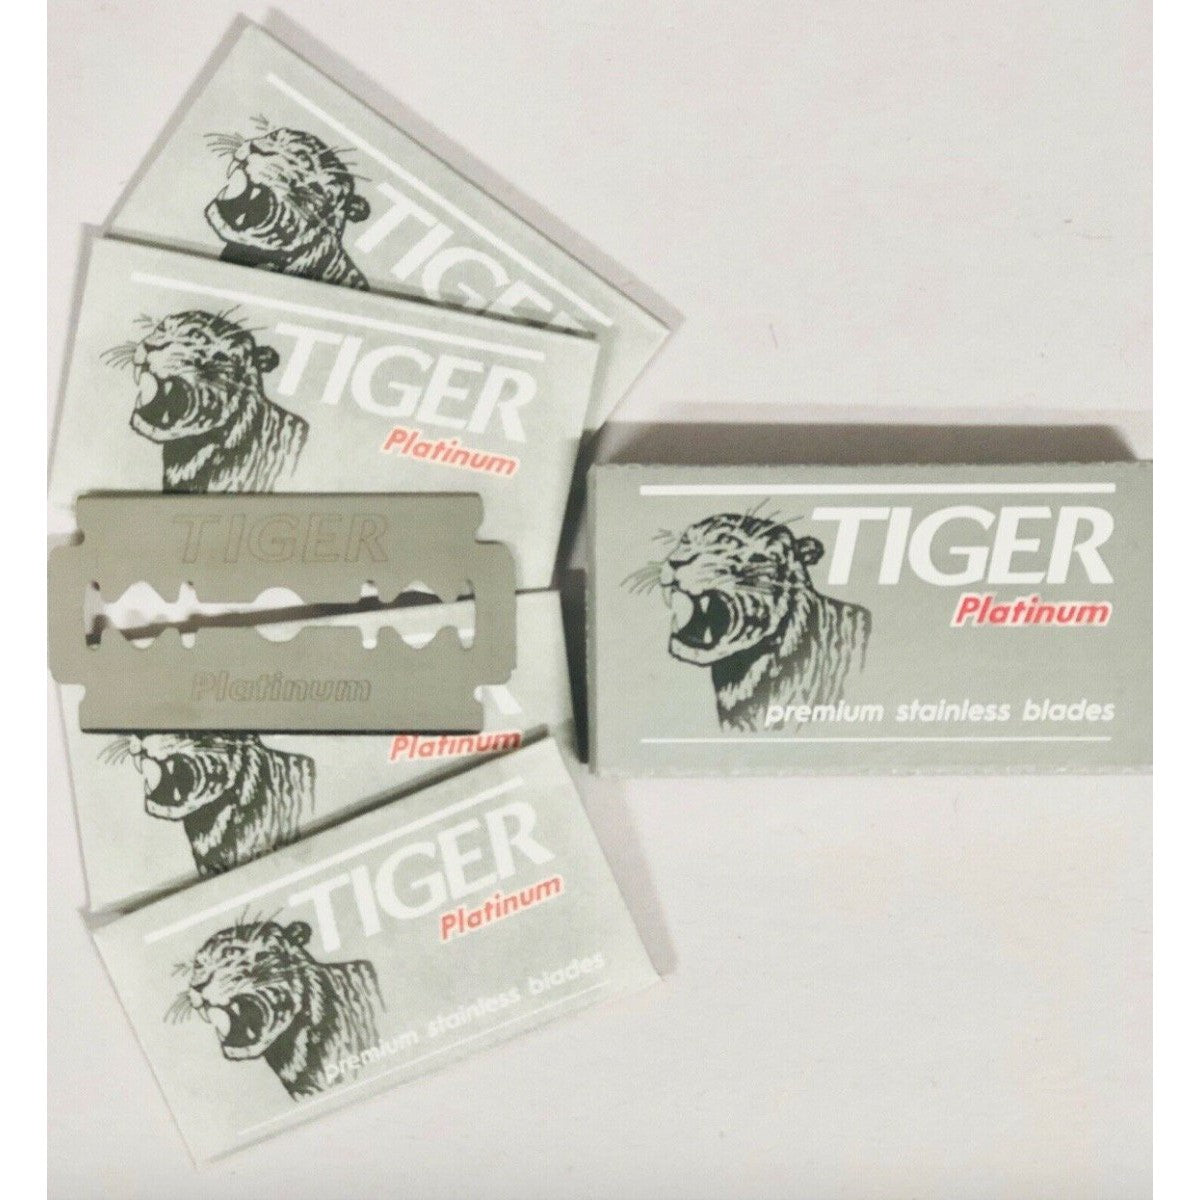 Tiger Premium Double Edge Razor Blades 100 Blades Czech Made